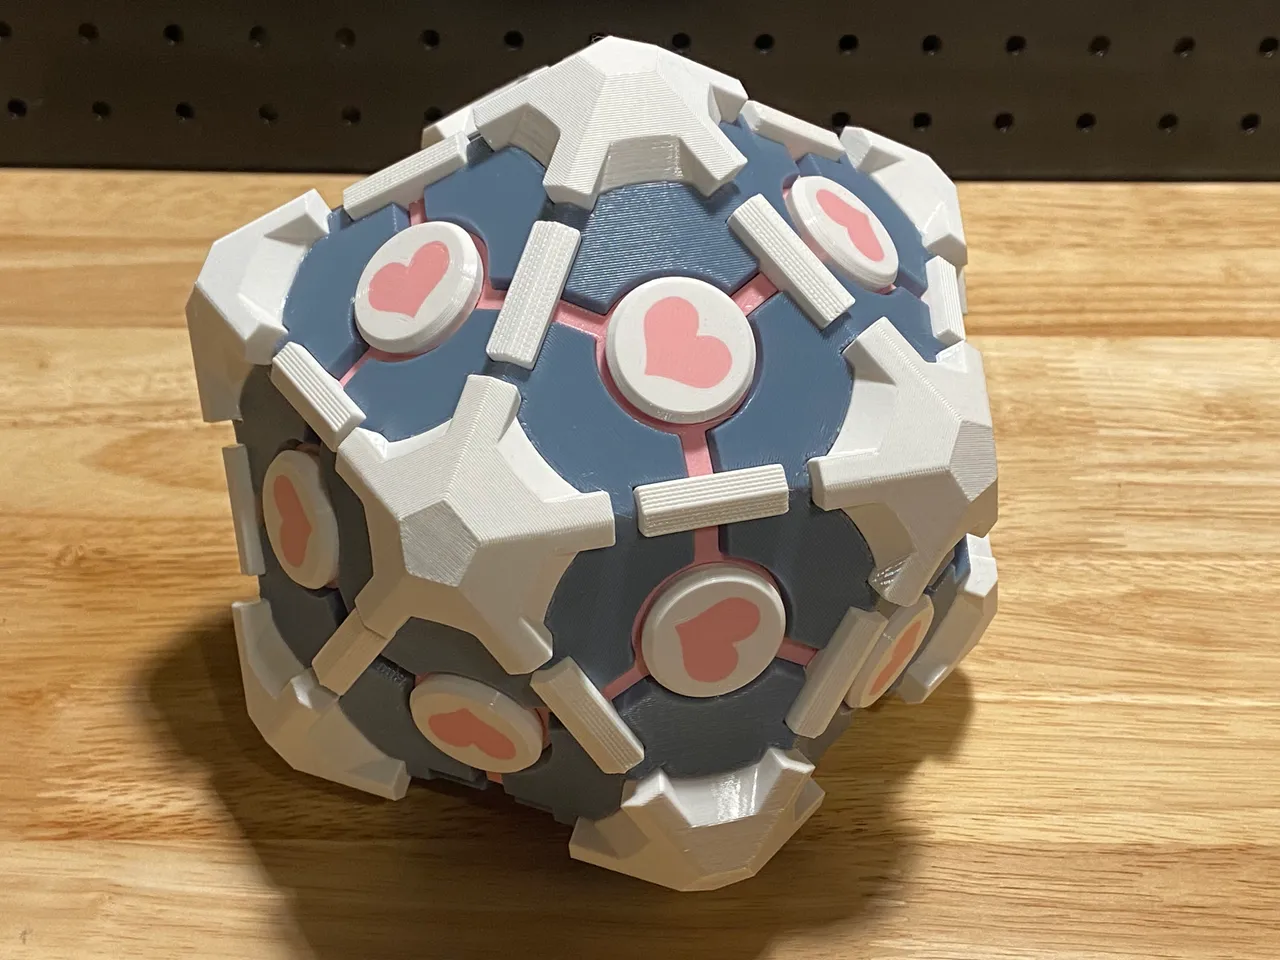 D20 Companion Cube by TheSameNameTwice